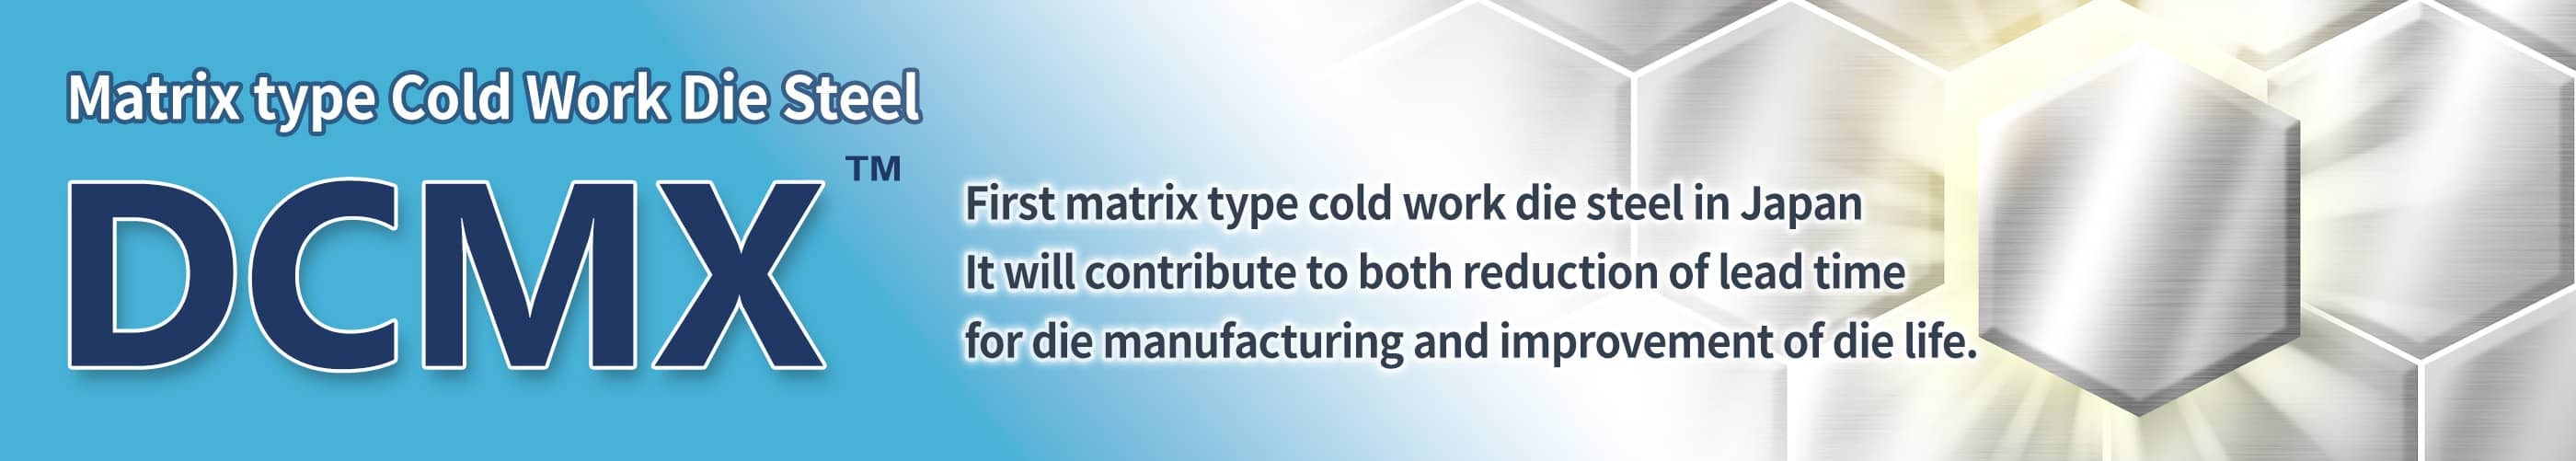 Matrix type Cold Work Die Steel DCMX